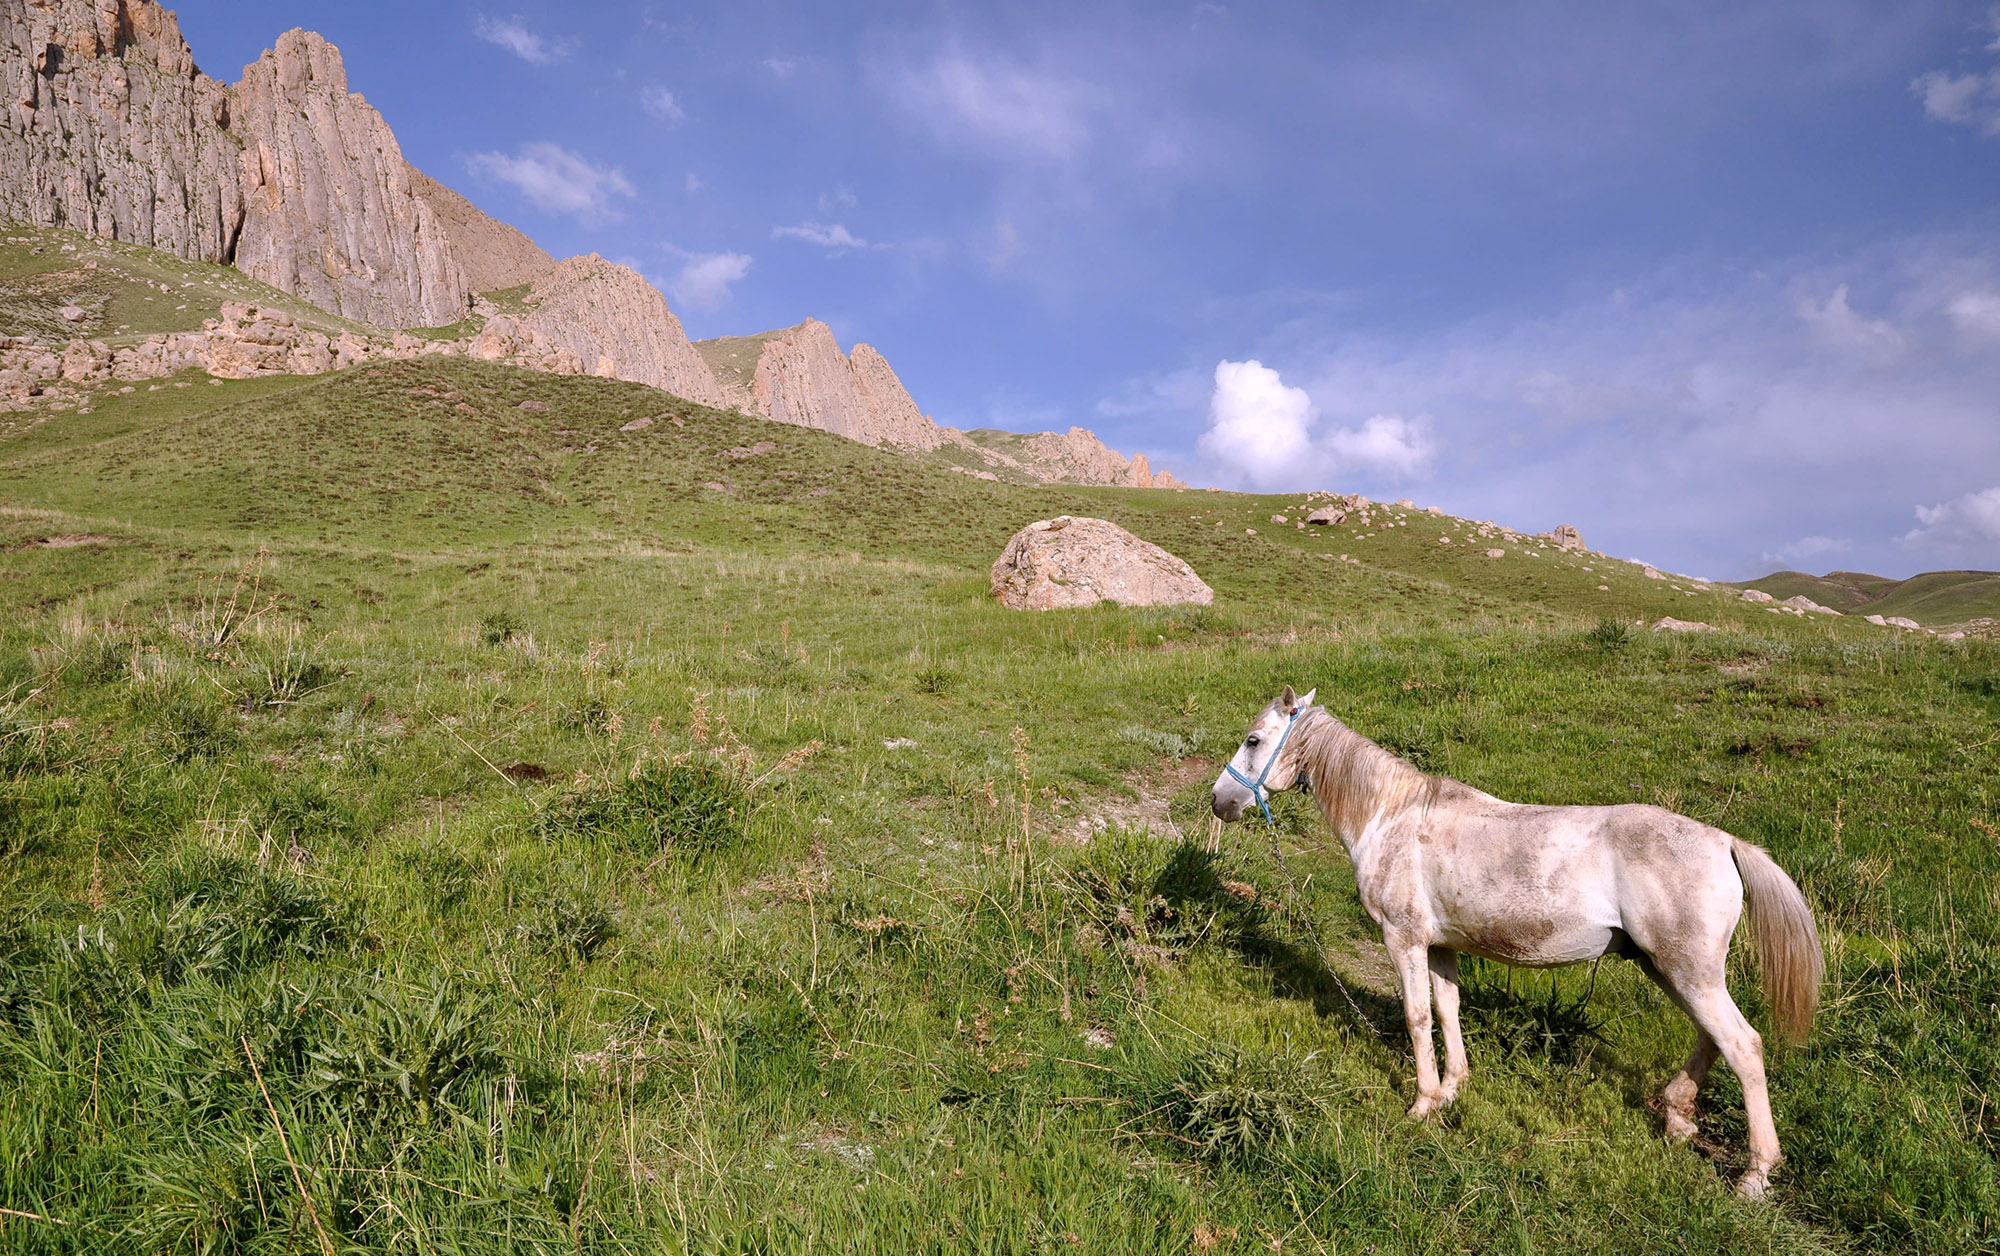 Mountain rock steppe in Ishak Pasha environs